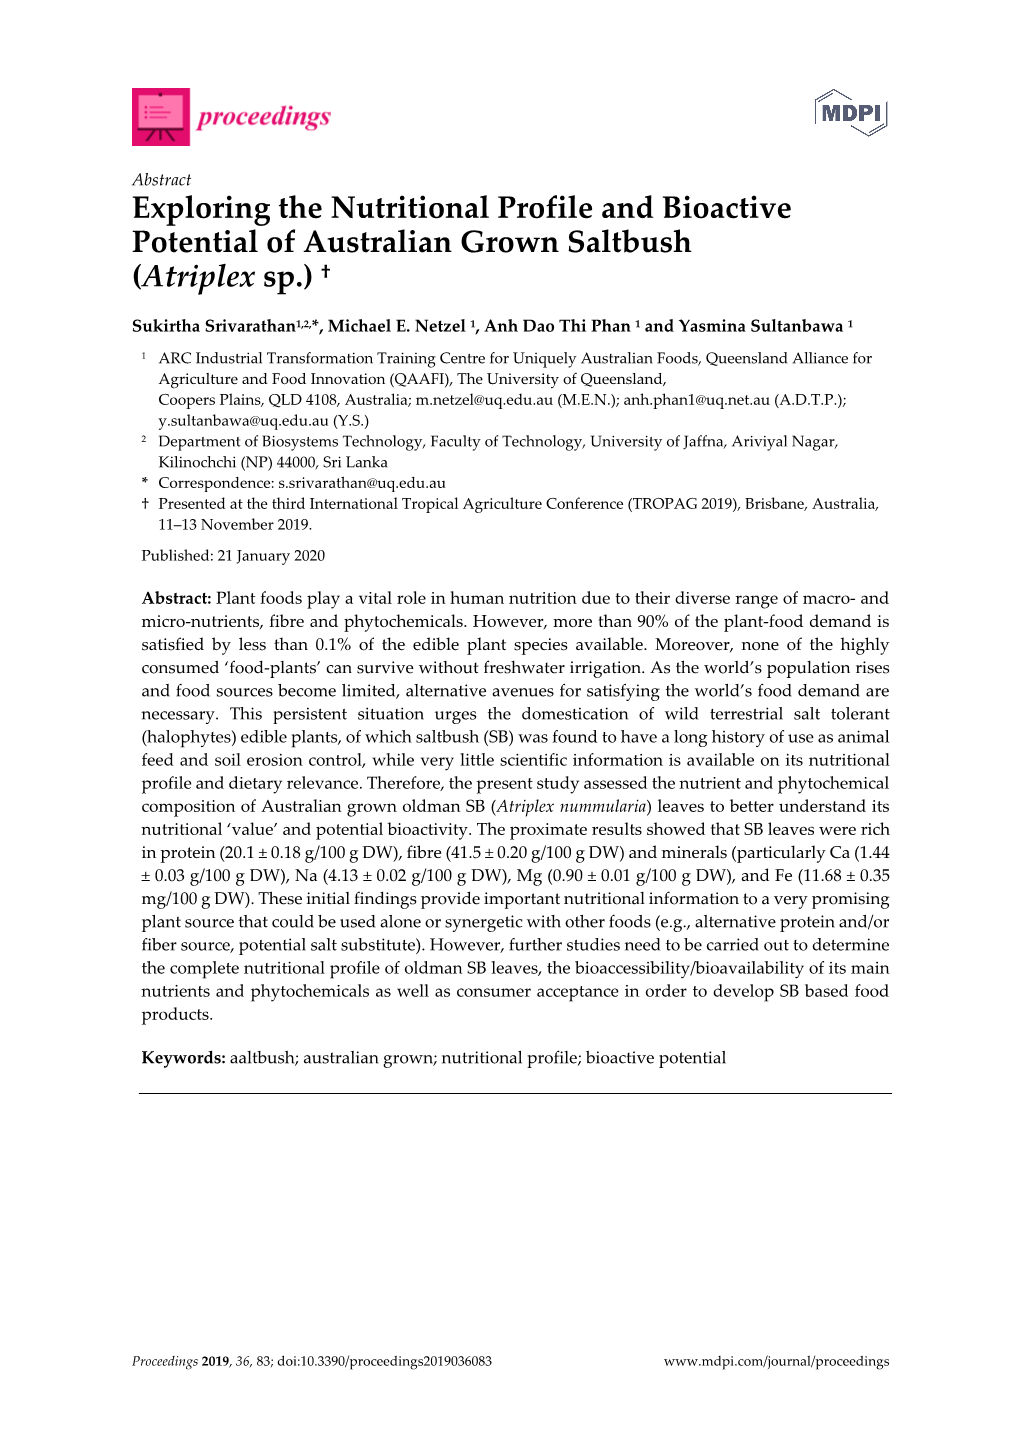 Exploring the Nutritional Profile and Bioactive Potential of Australian Grown Saltbush (Atriplex Sp.) †